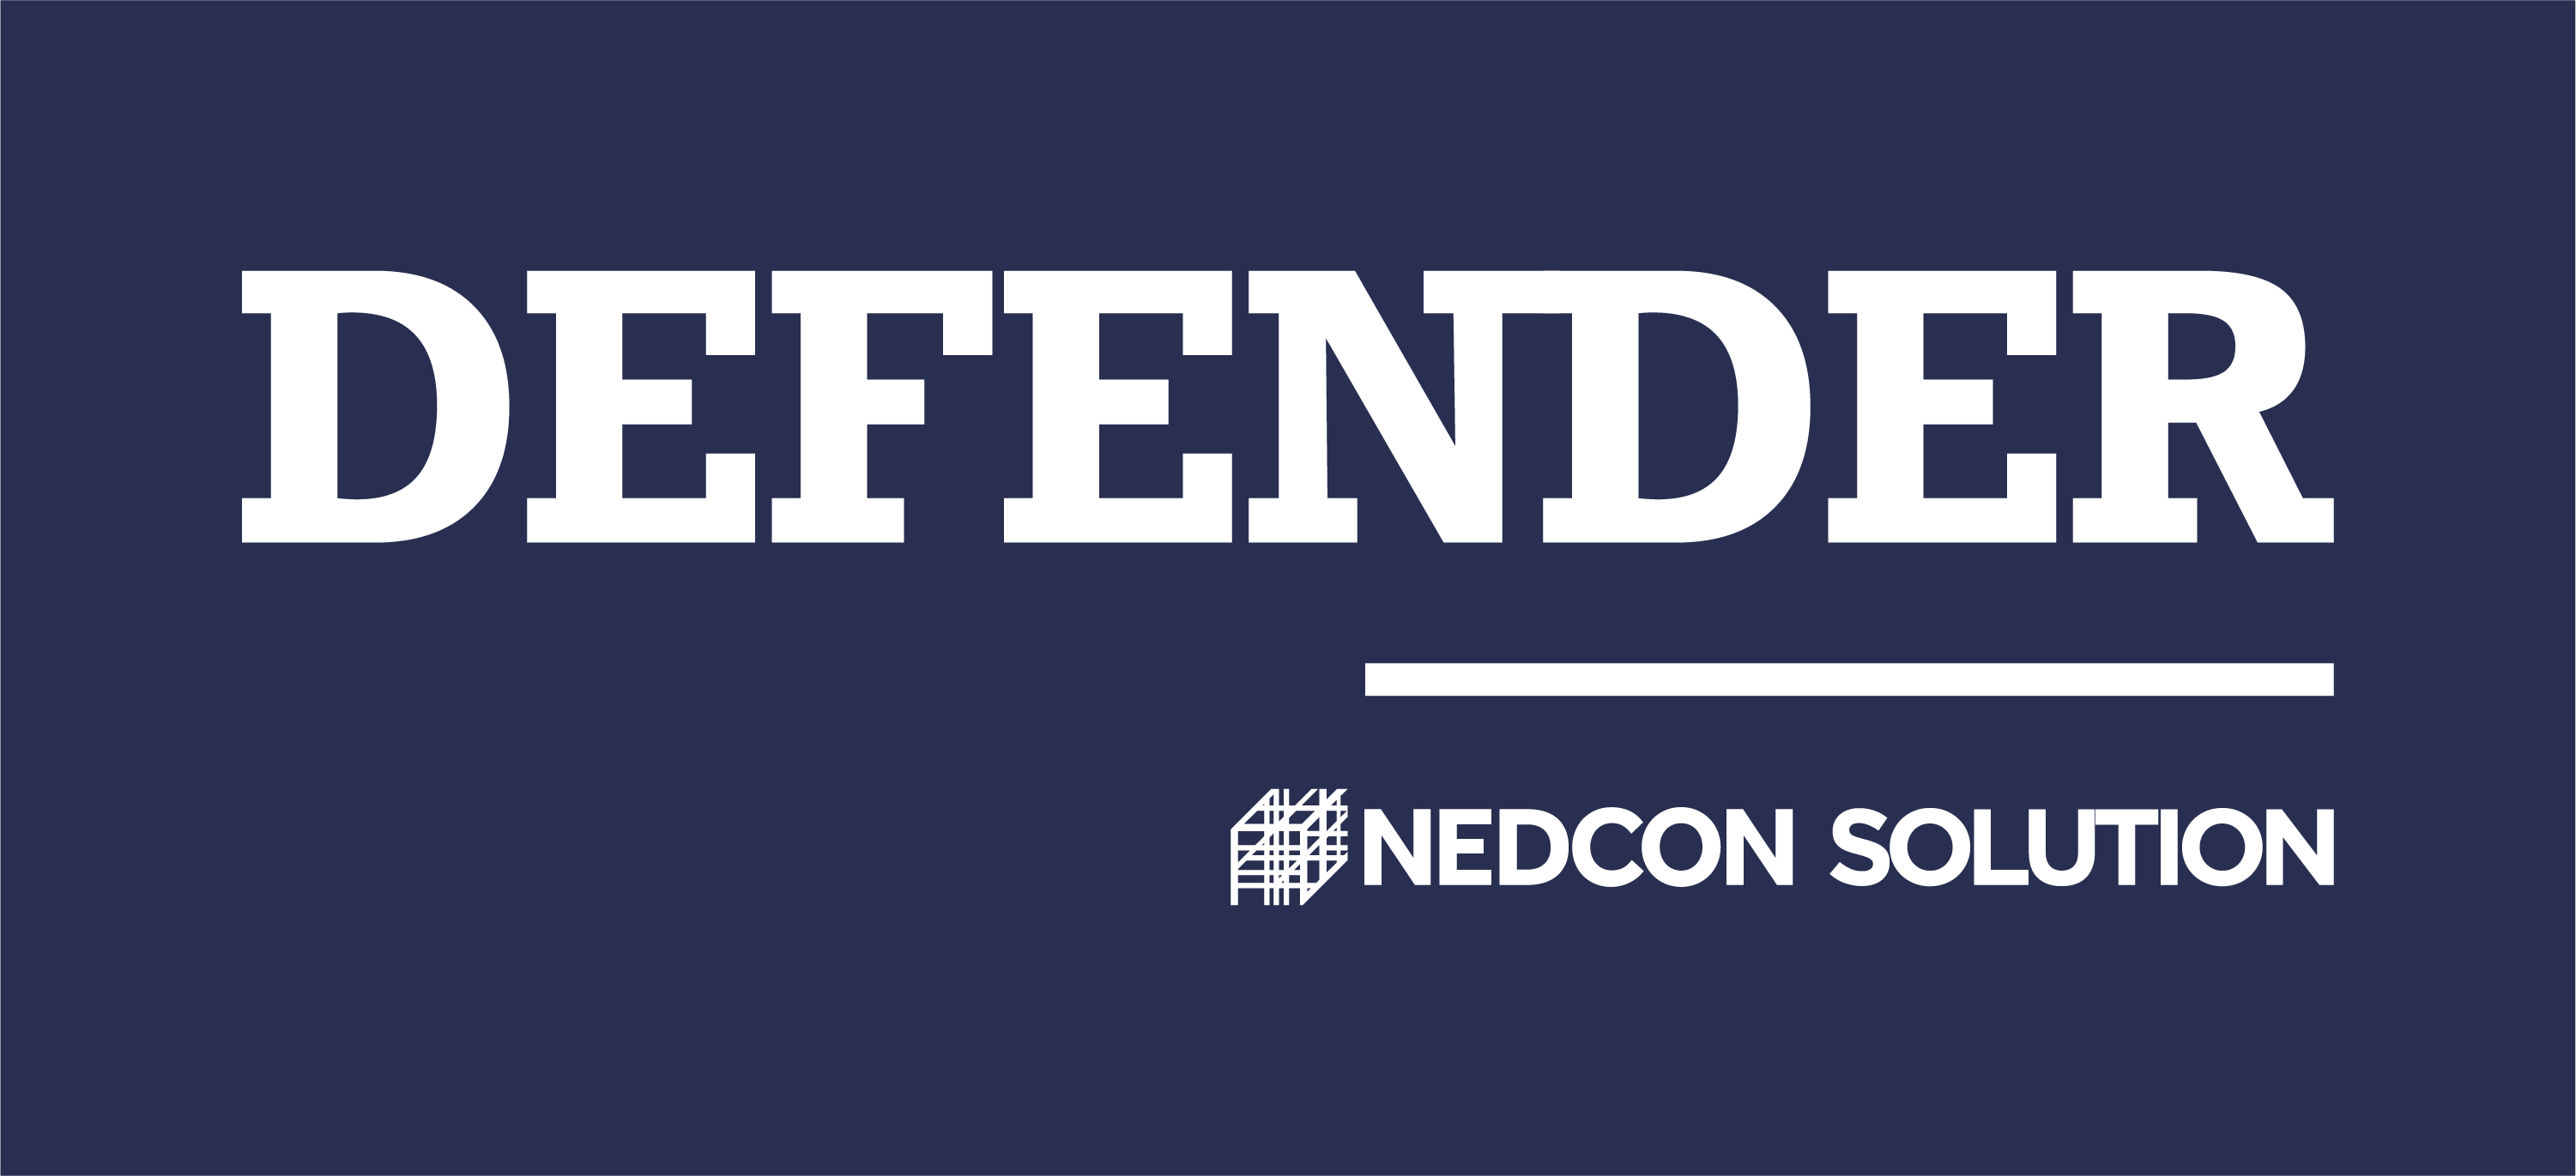 NEDCO-2162-Defender-logo-blauwwit-RGB-DF